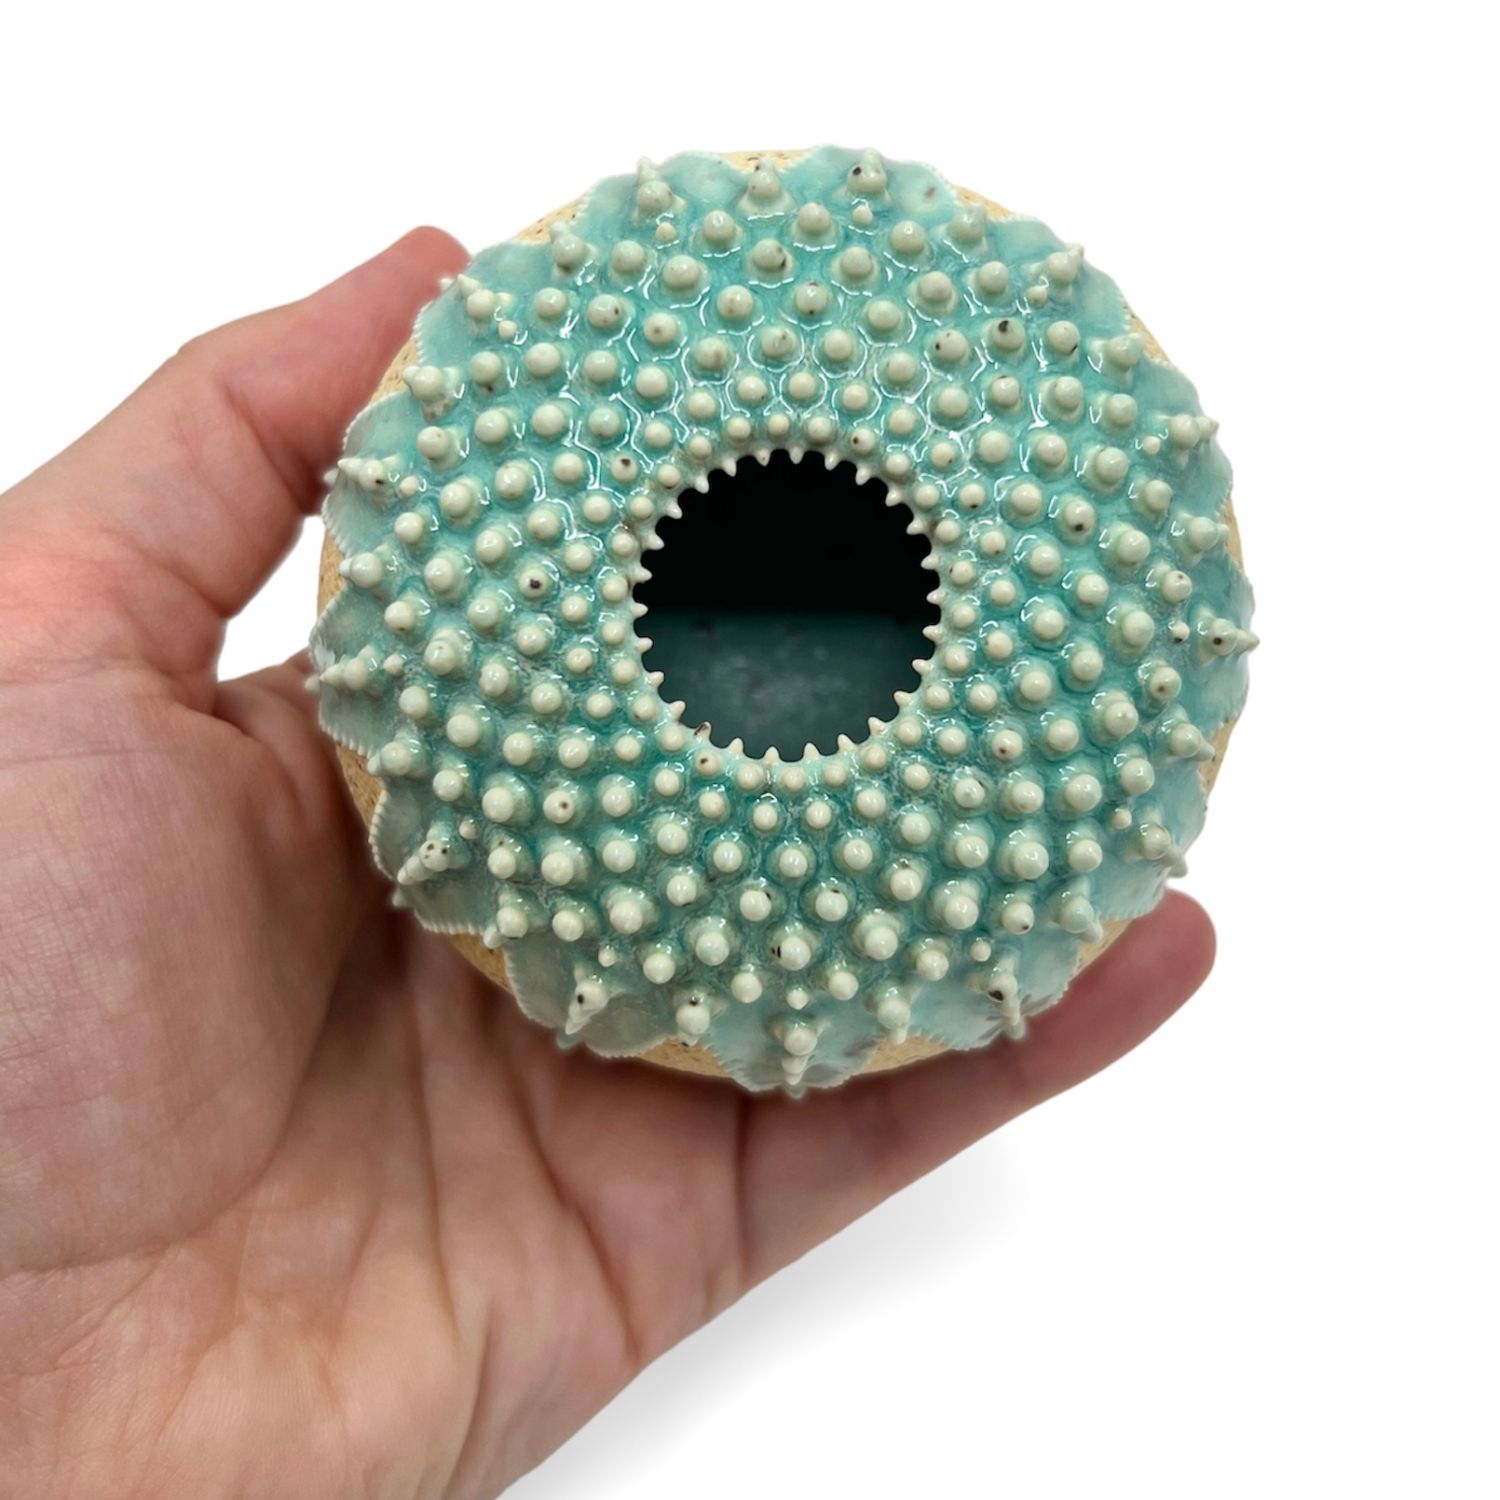 Zara Gardner: Turquoise Urchin Sculpture Product Image 3 of 5